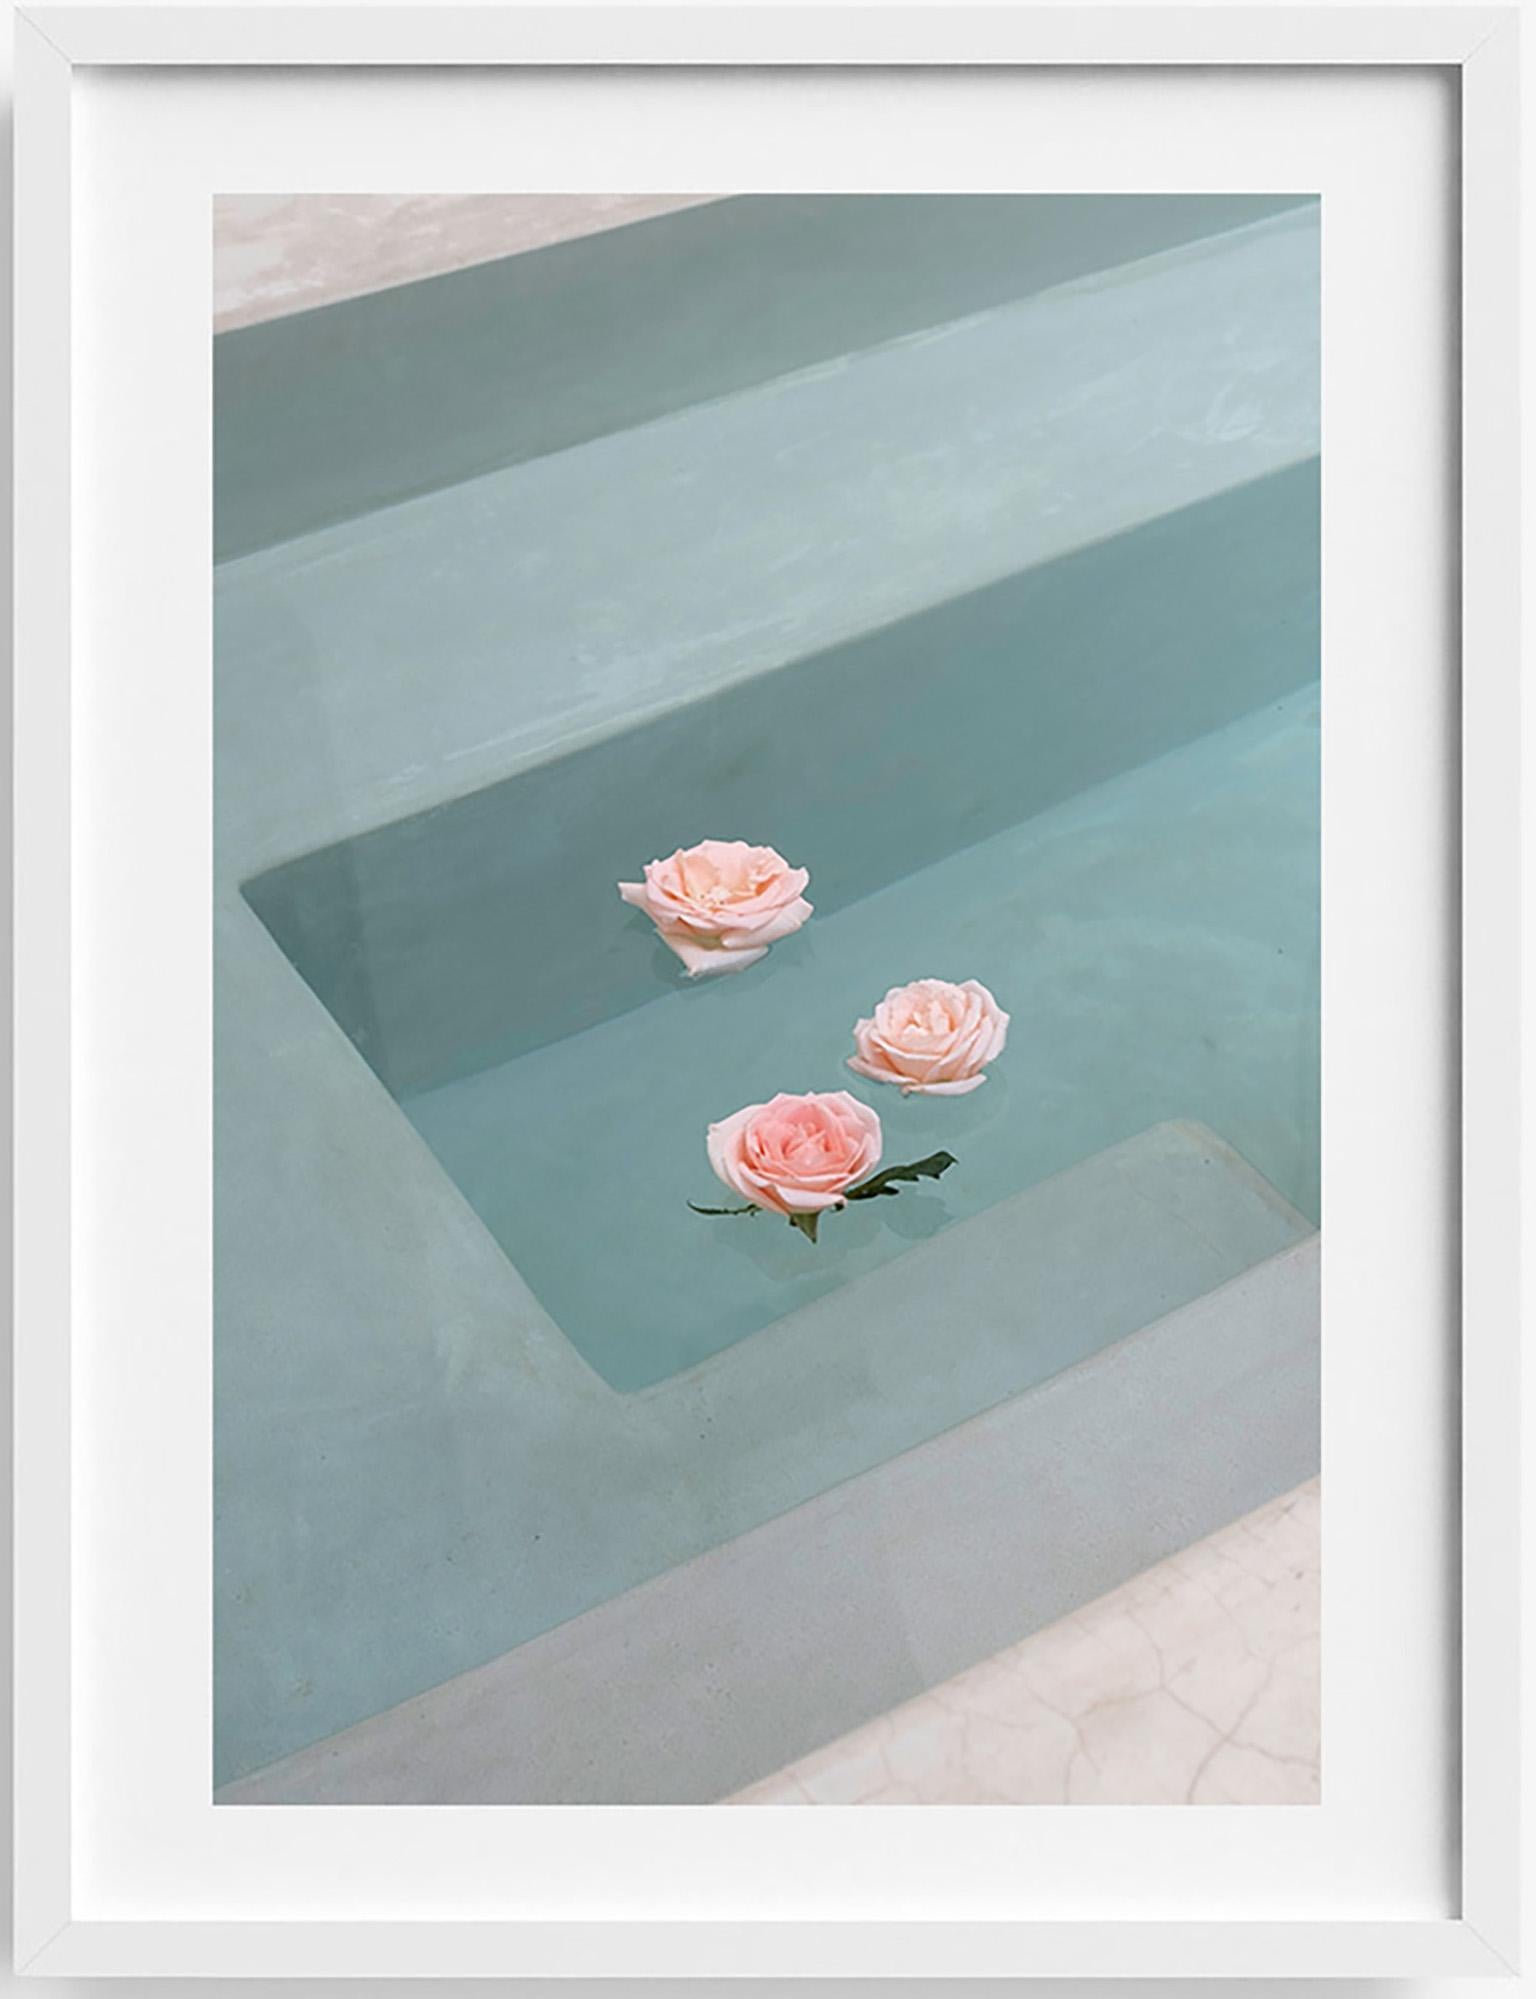 Clemente Vergara Landscape Photograph - Roses Floating